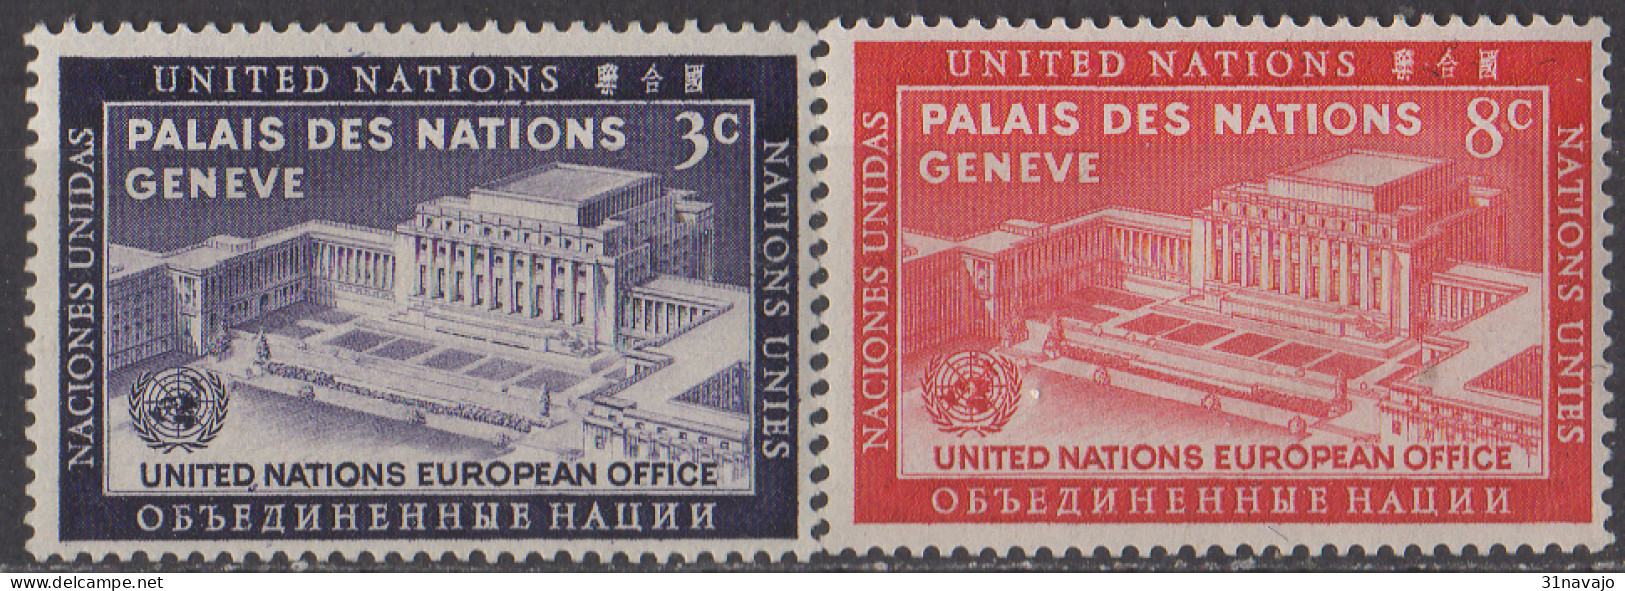 NATIONS UNIES (New York) - Journée Des Nations Unies 1954 - Unused Stamps